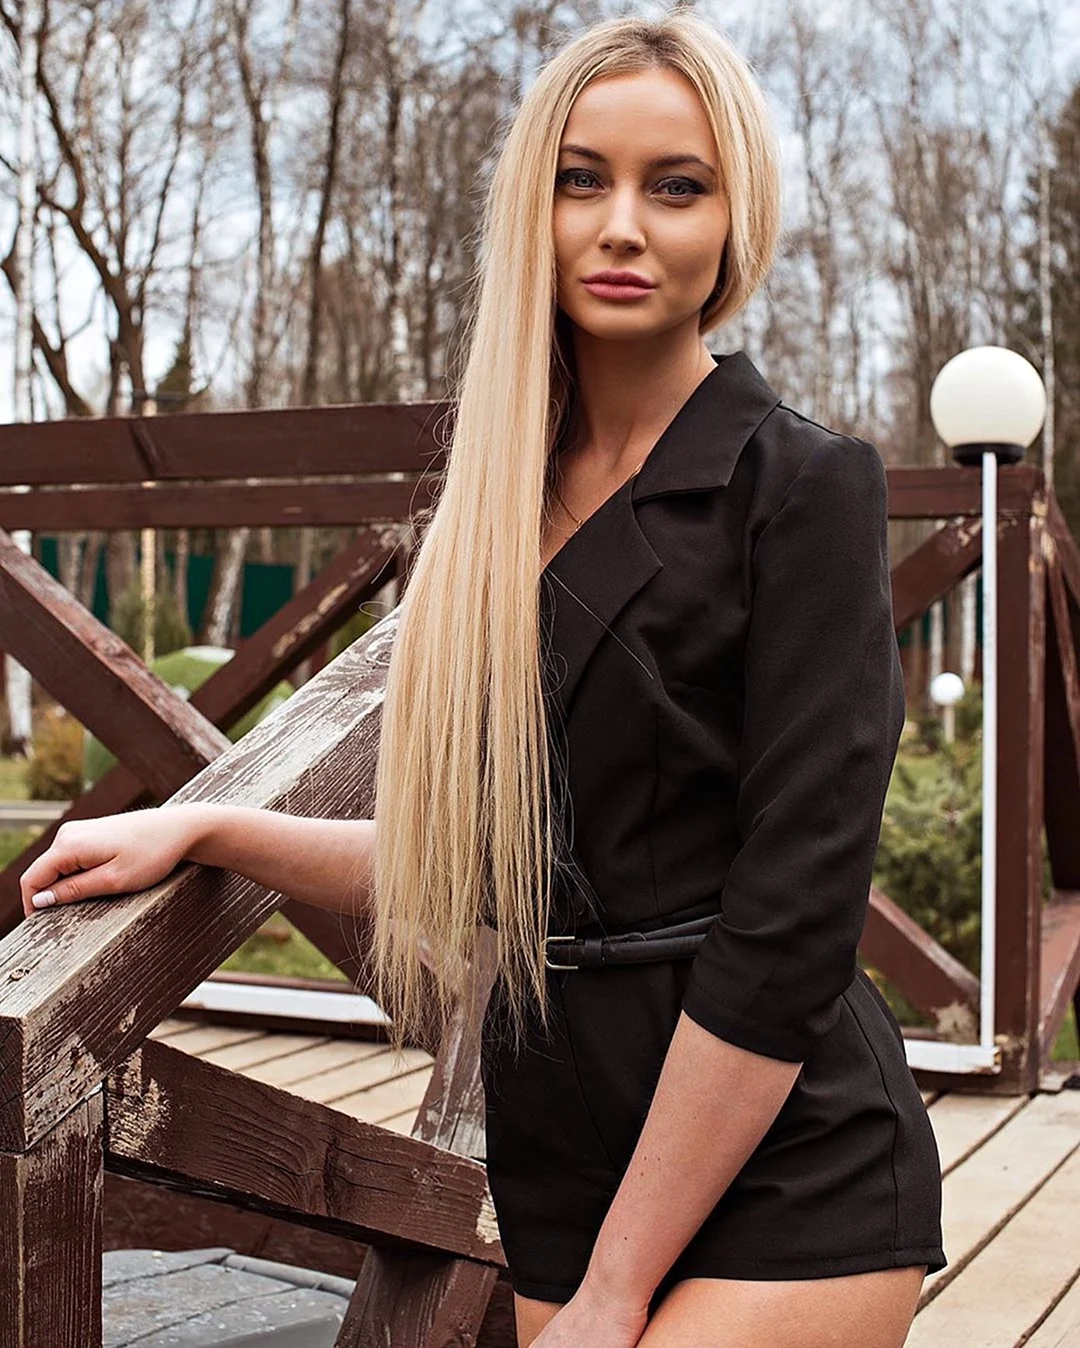 Светлана Тихомирова. Красивая девушка